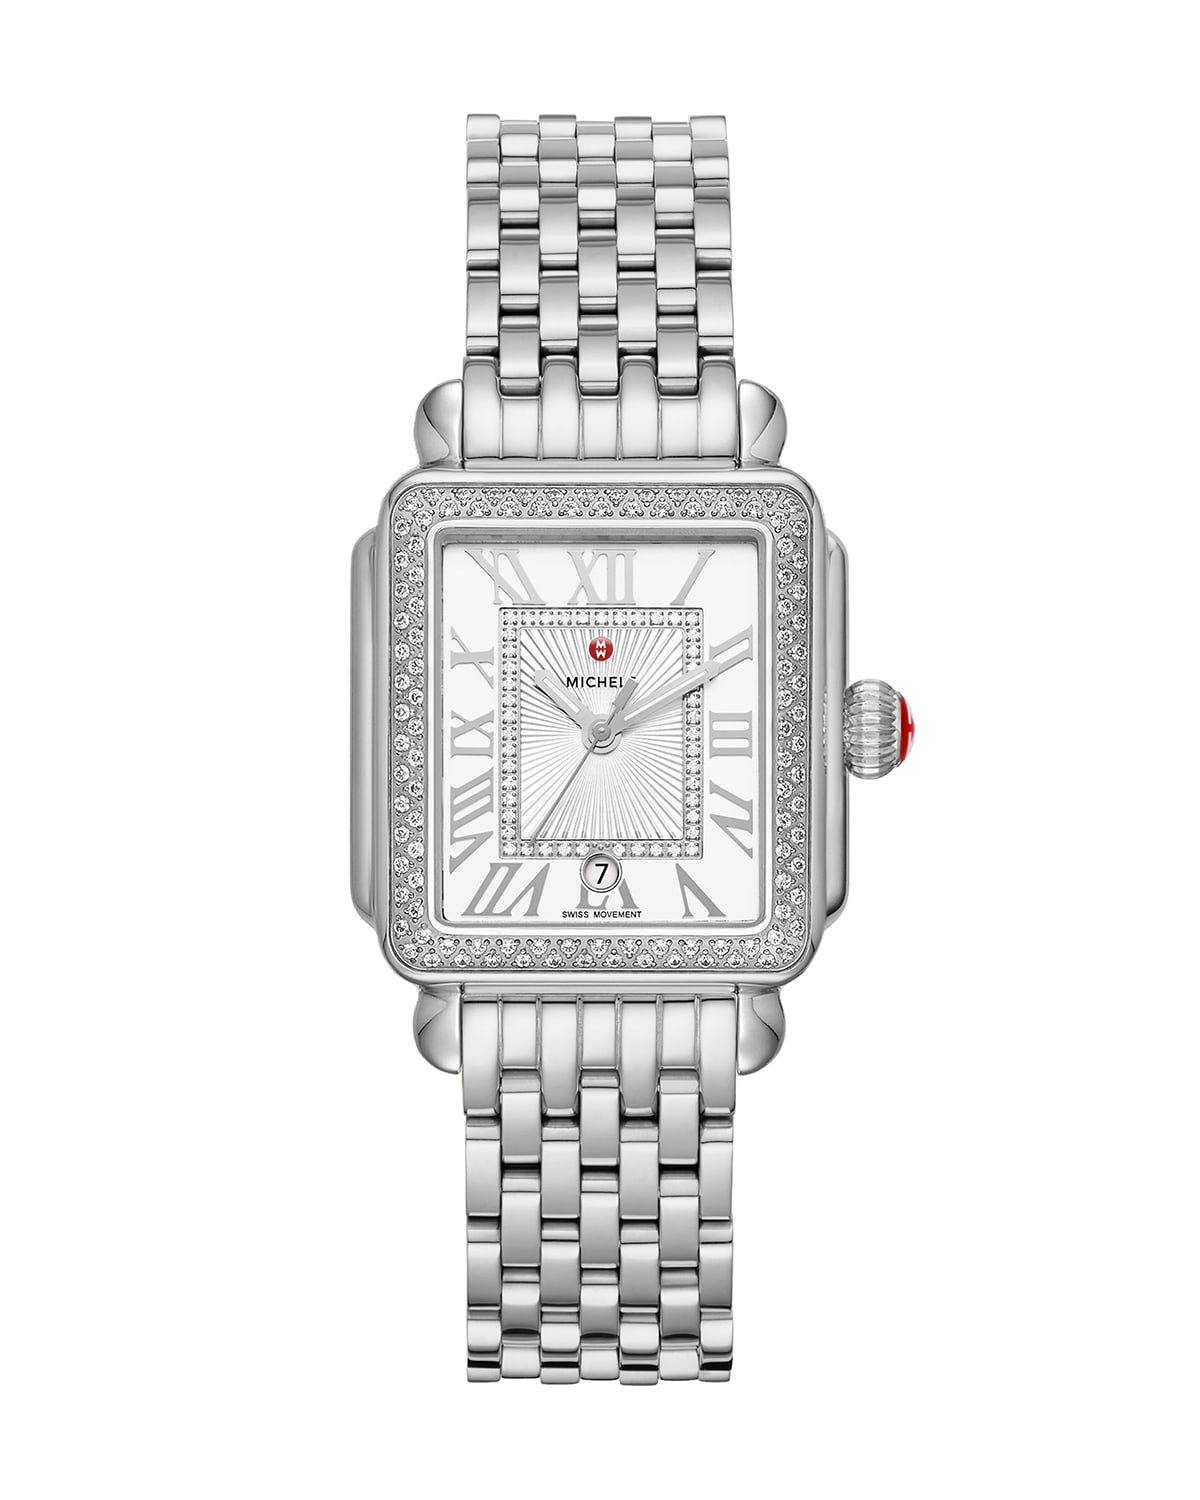 Deco Madison Mid Stainless Steel Diamond Watch